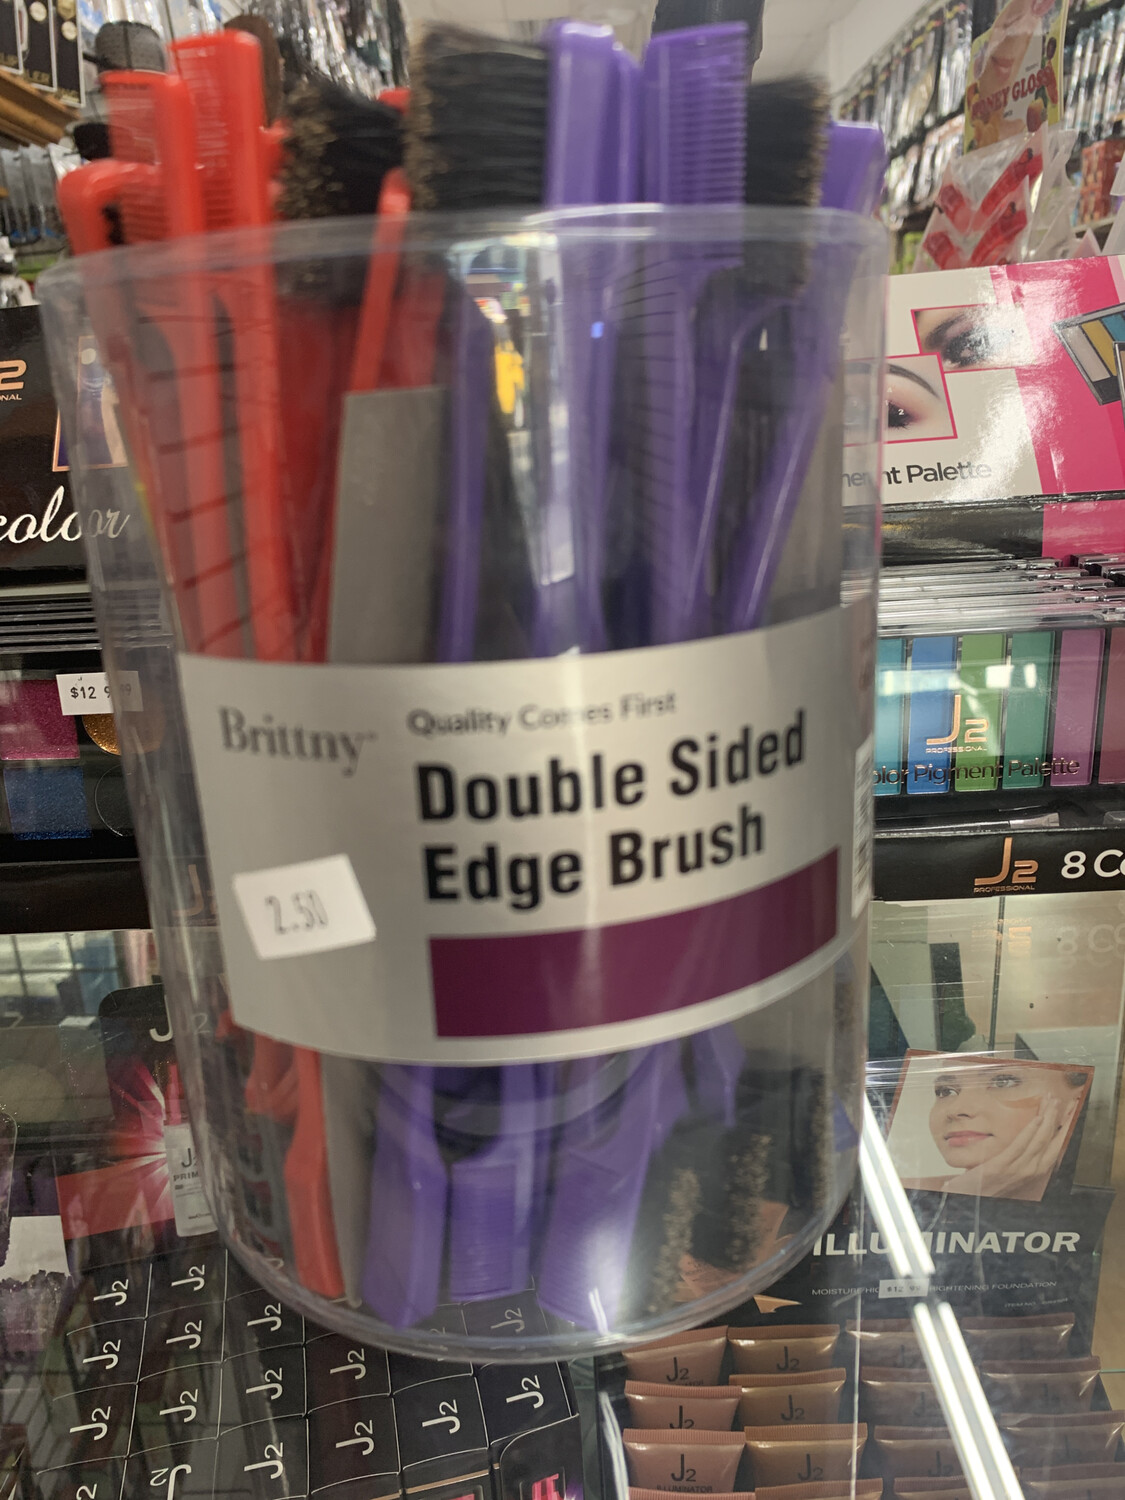 Brittny Bouble Sided Edge Brush